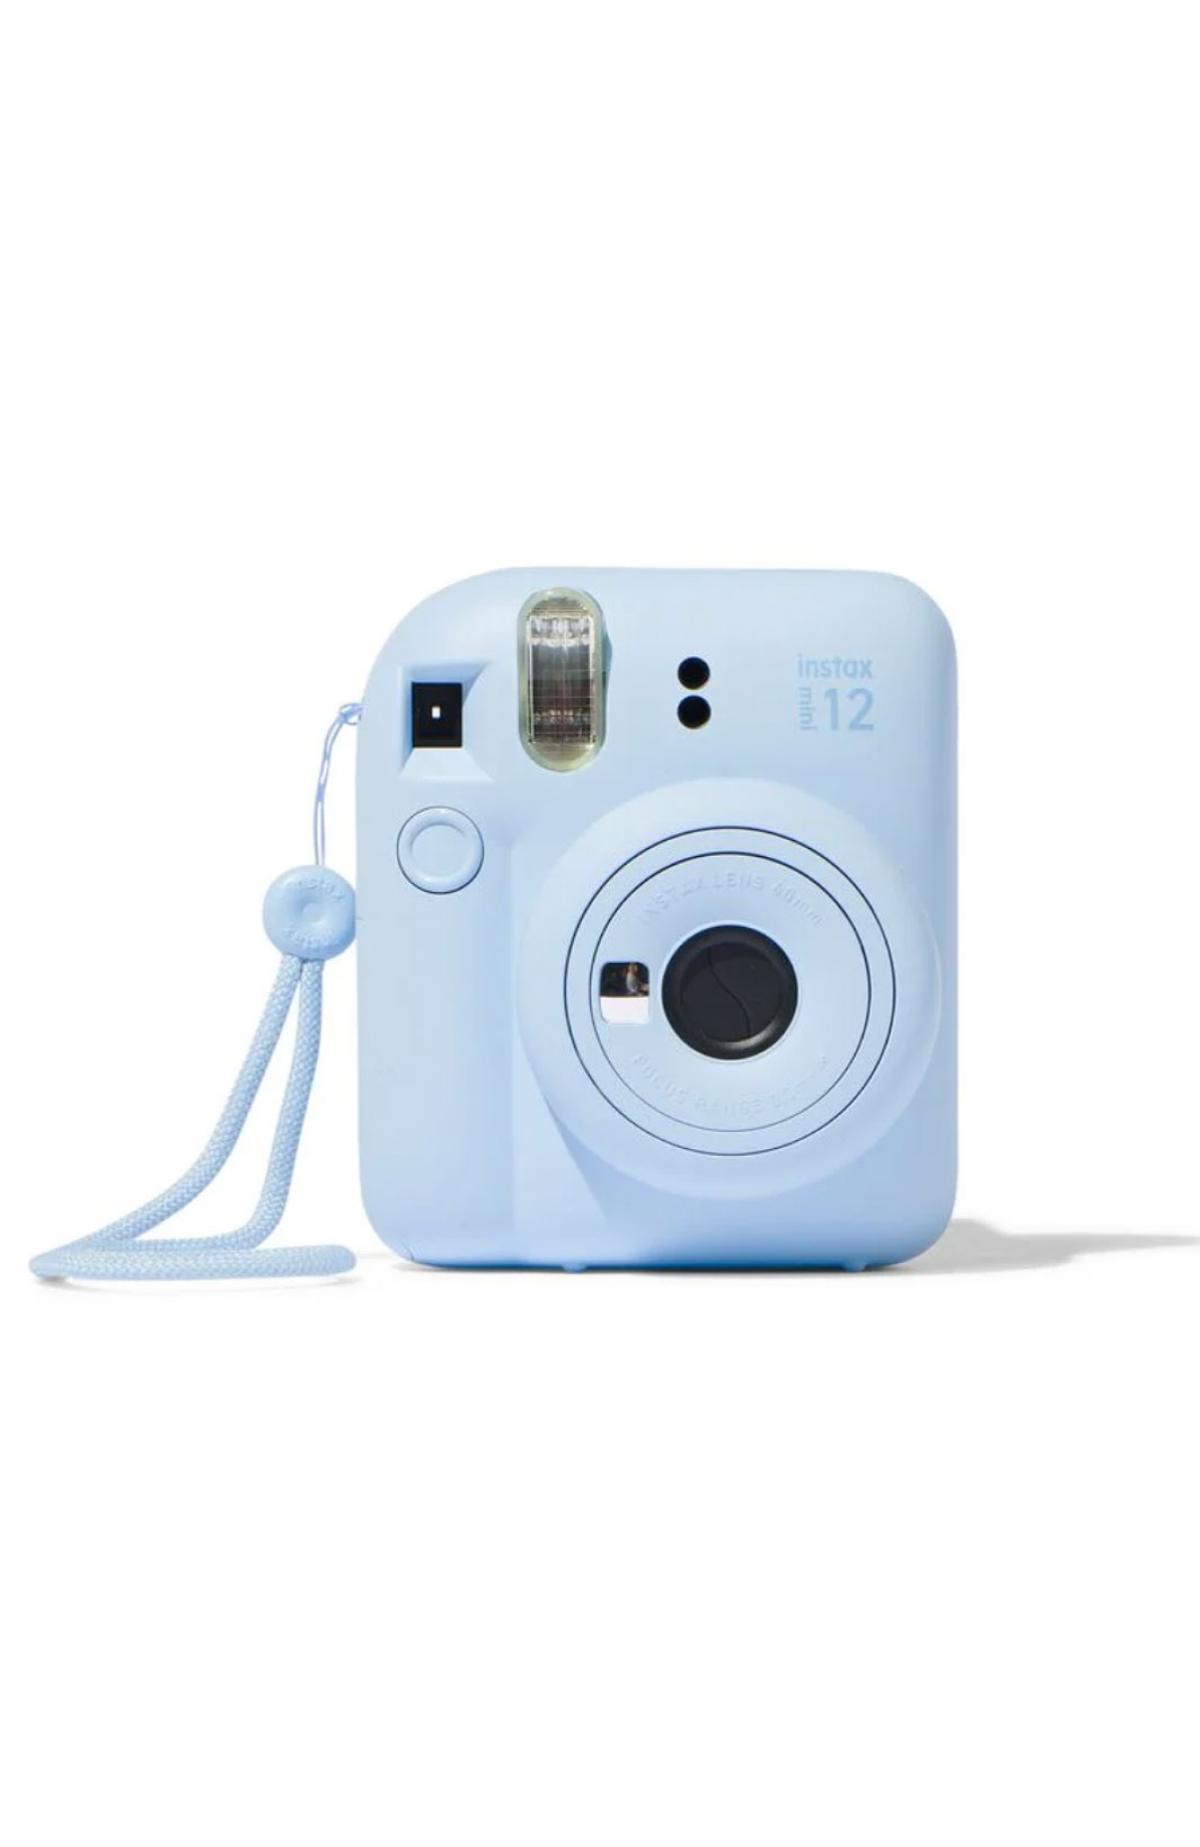 Pastelblauwe polaroidcamera Instax mini 12 